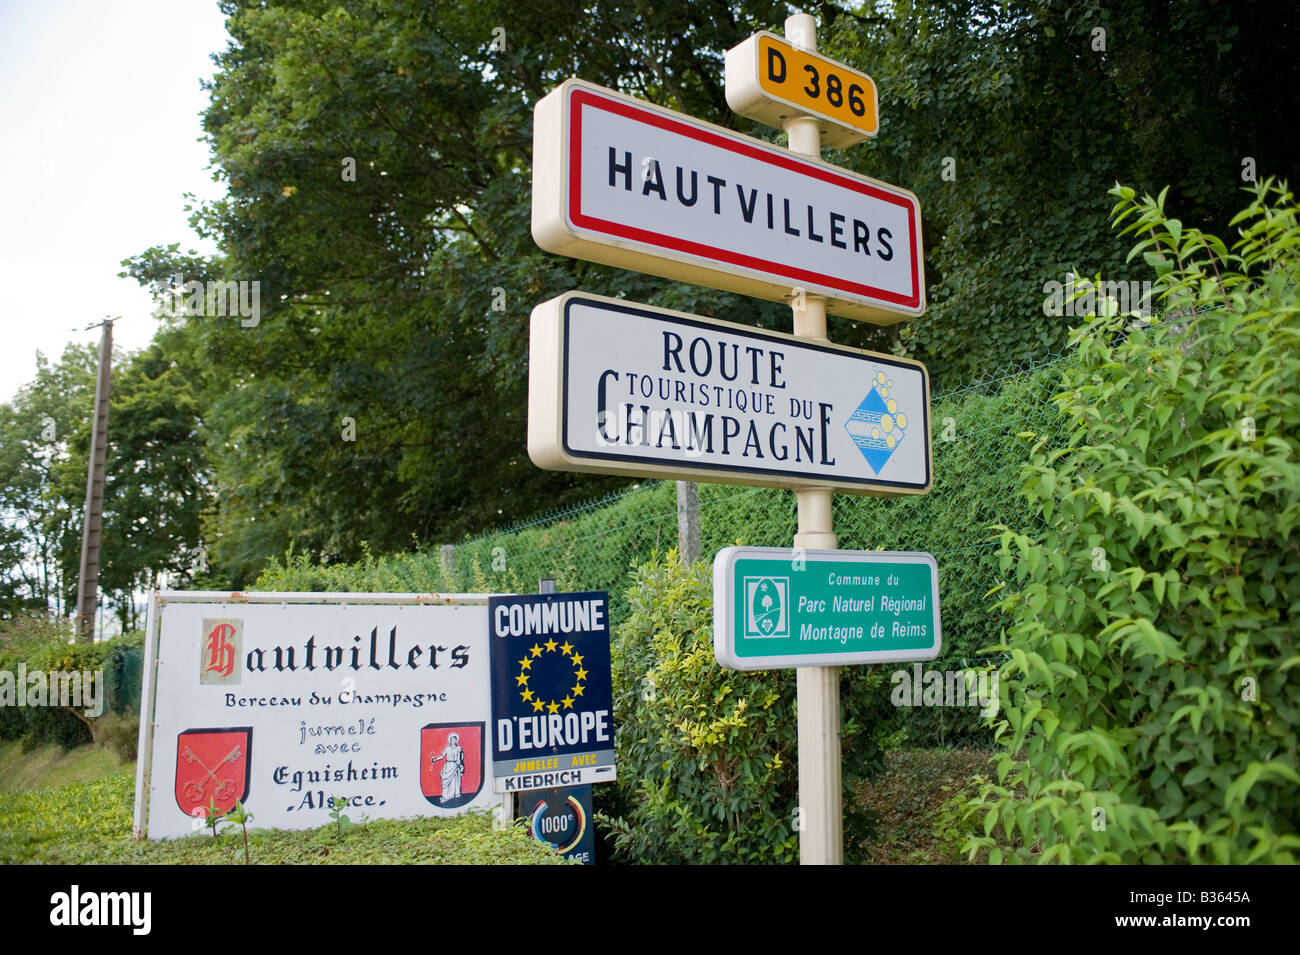 Hautvillers village entrance sign France Stock Photo - Alamy